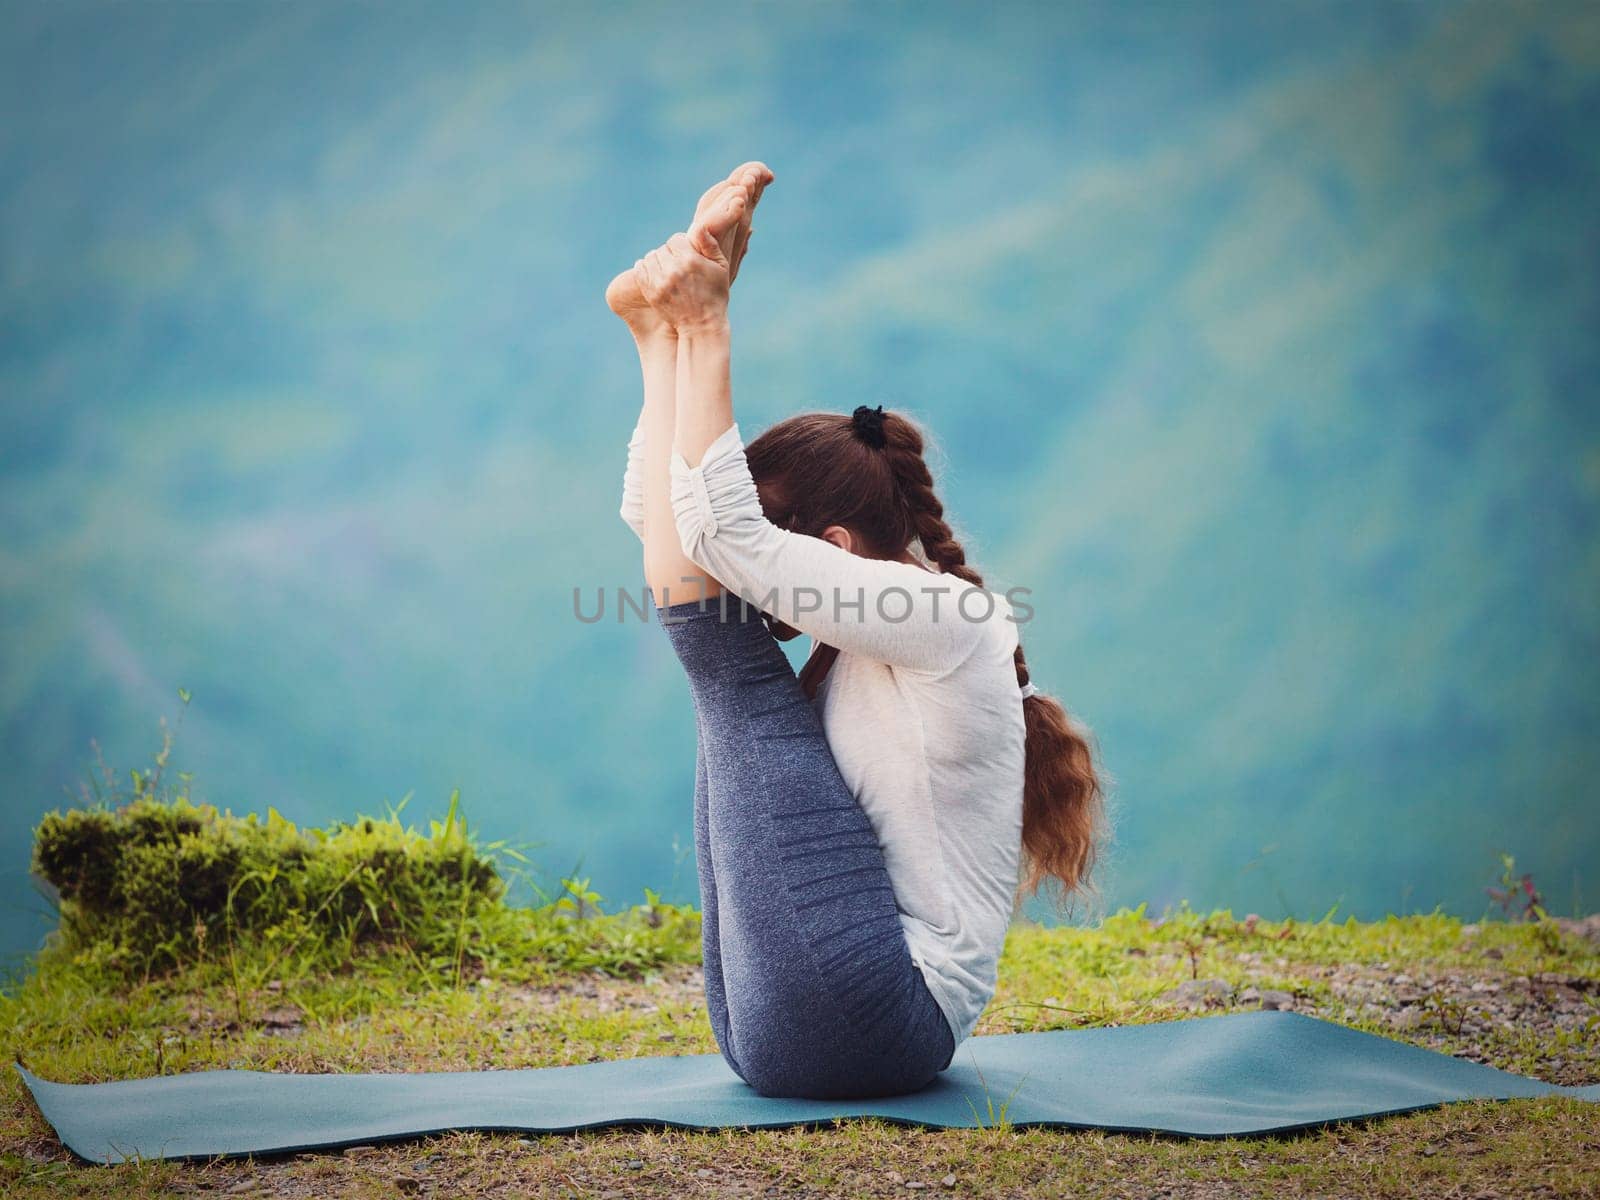 Woman practices yoga asana Urdhva mukha paschimottanasana by dimol